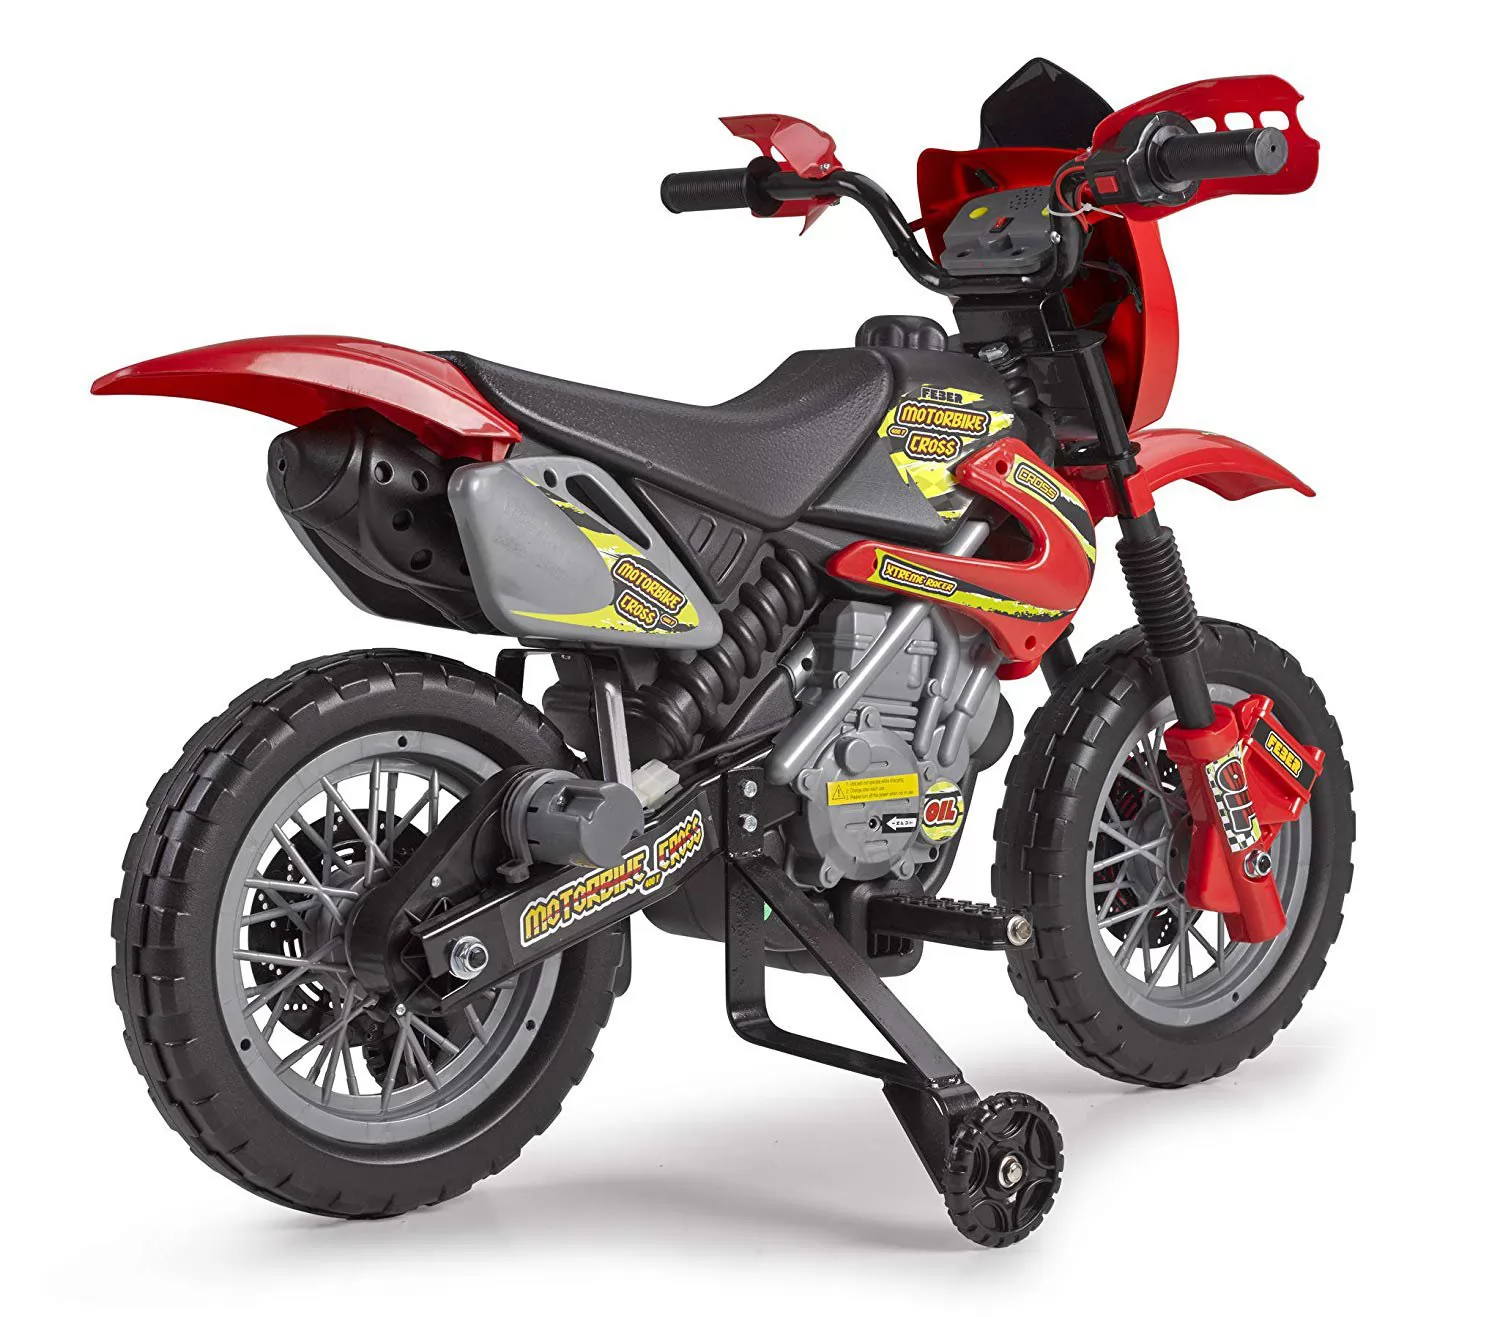 Motorbike Cross 400F 6V 2